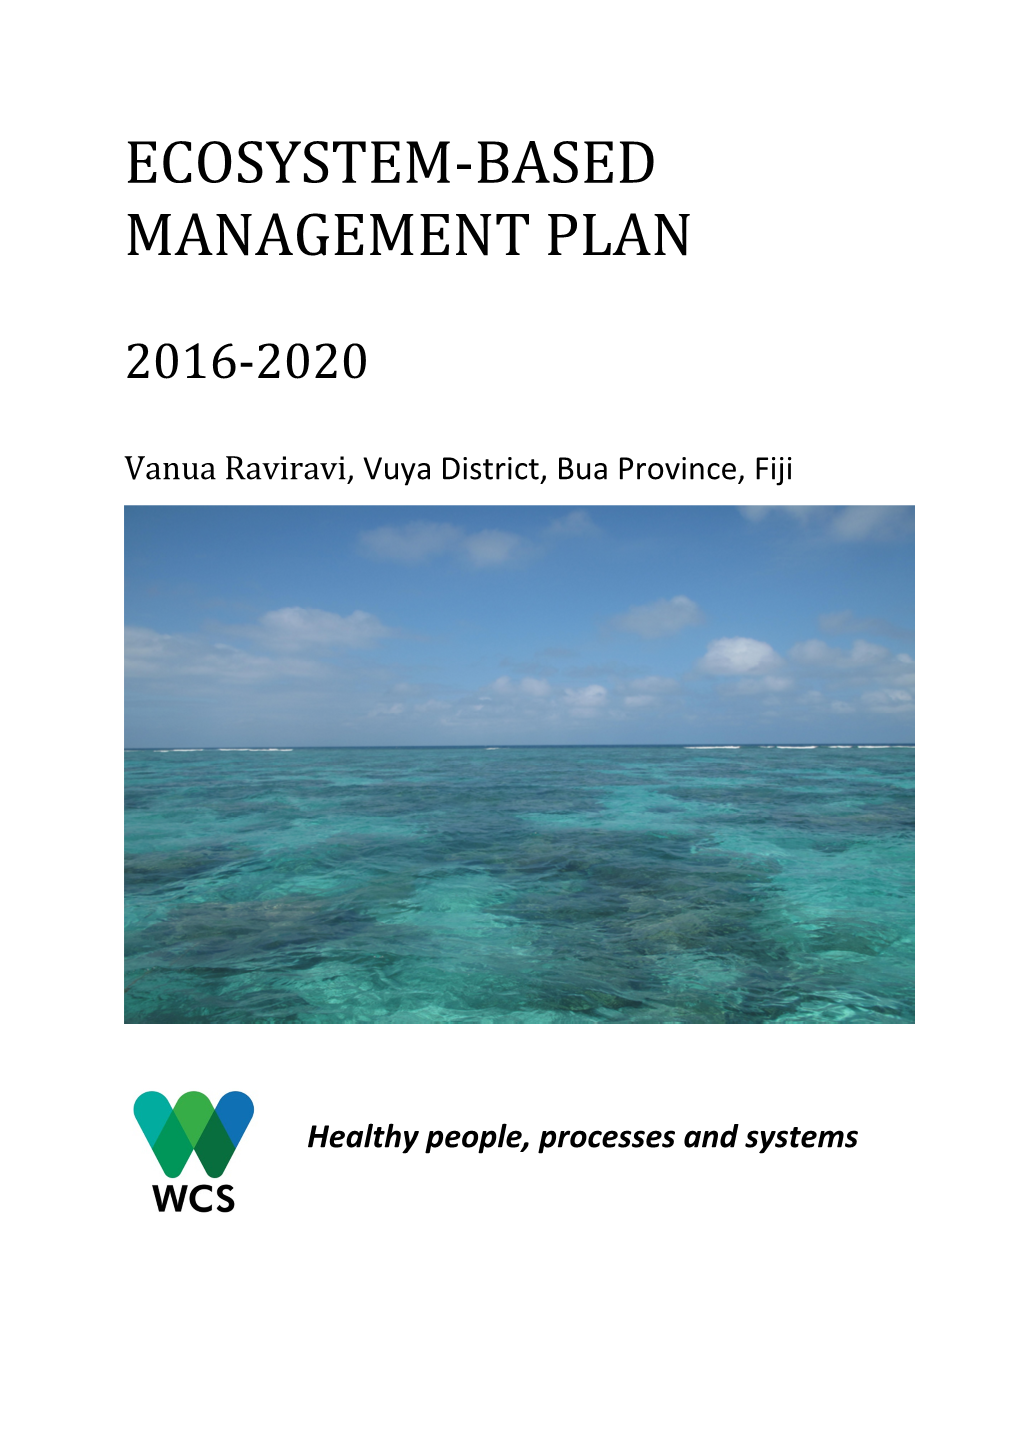 Ecosystem-Based Management Plan